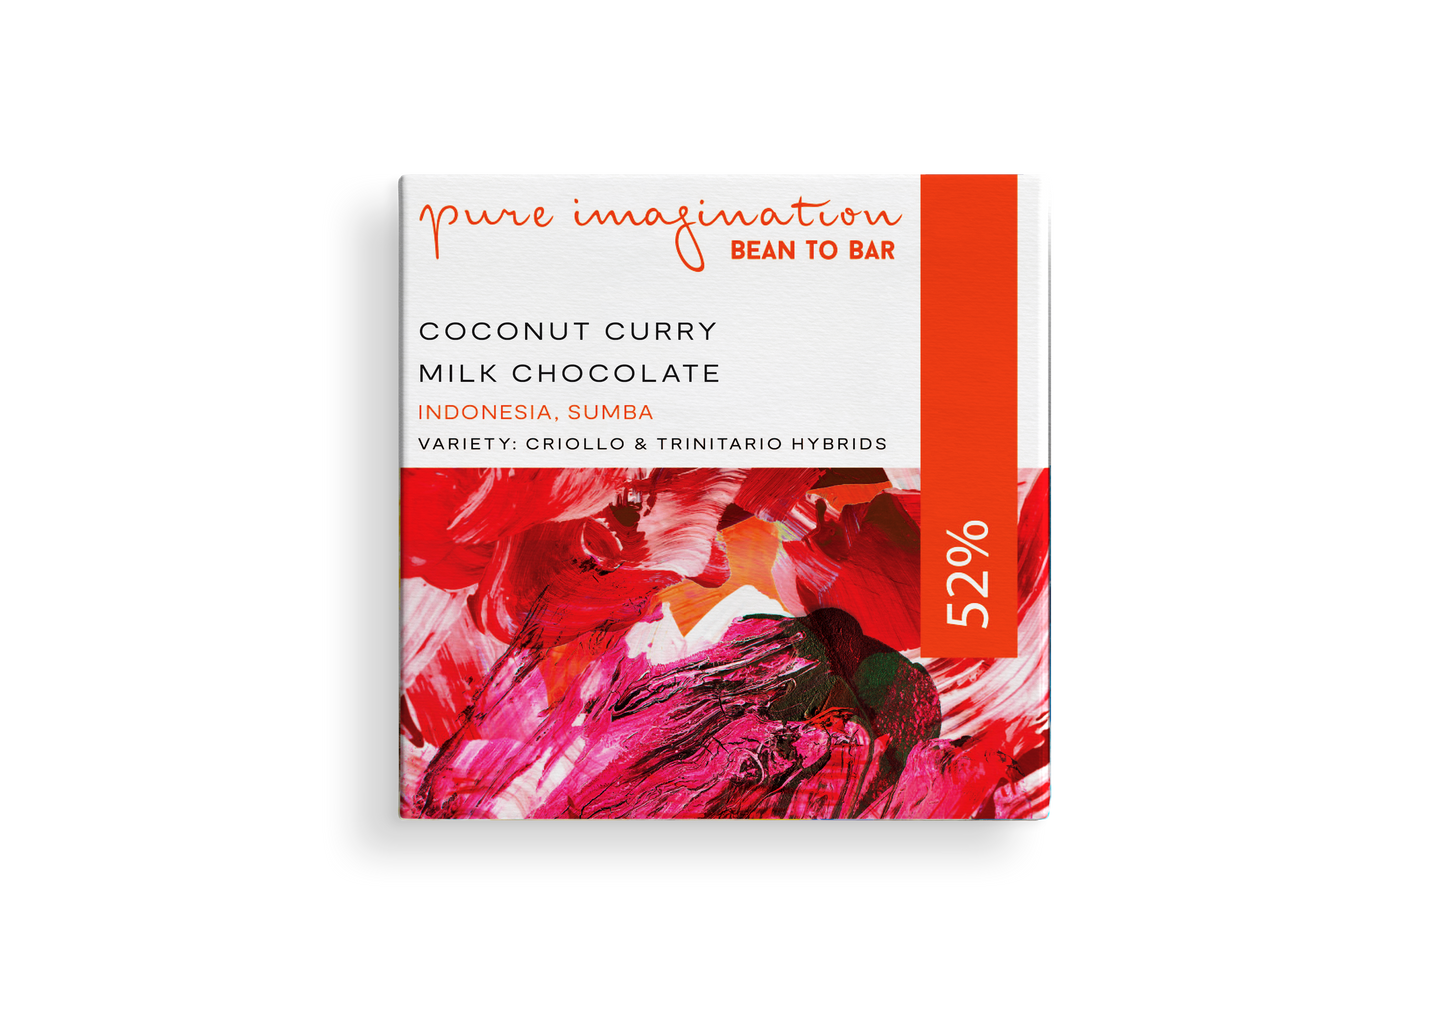 52% Coconut Curry Milk Chocolate